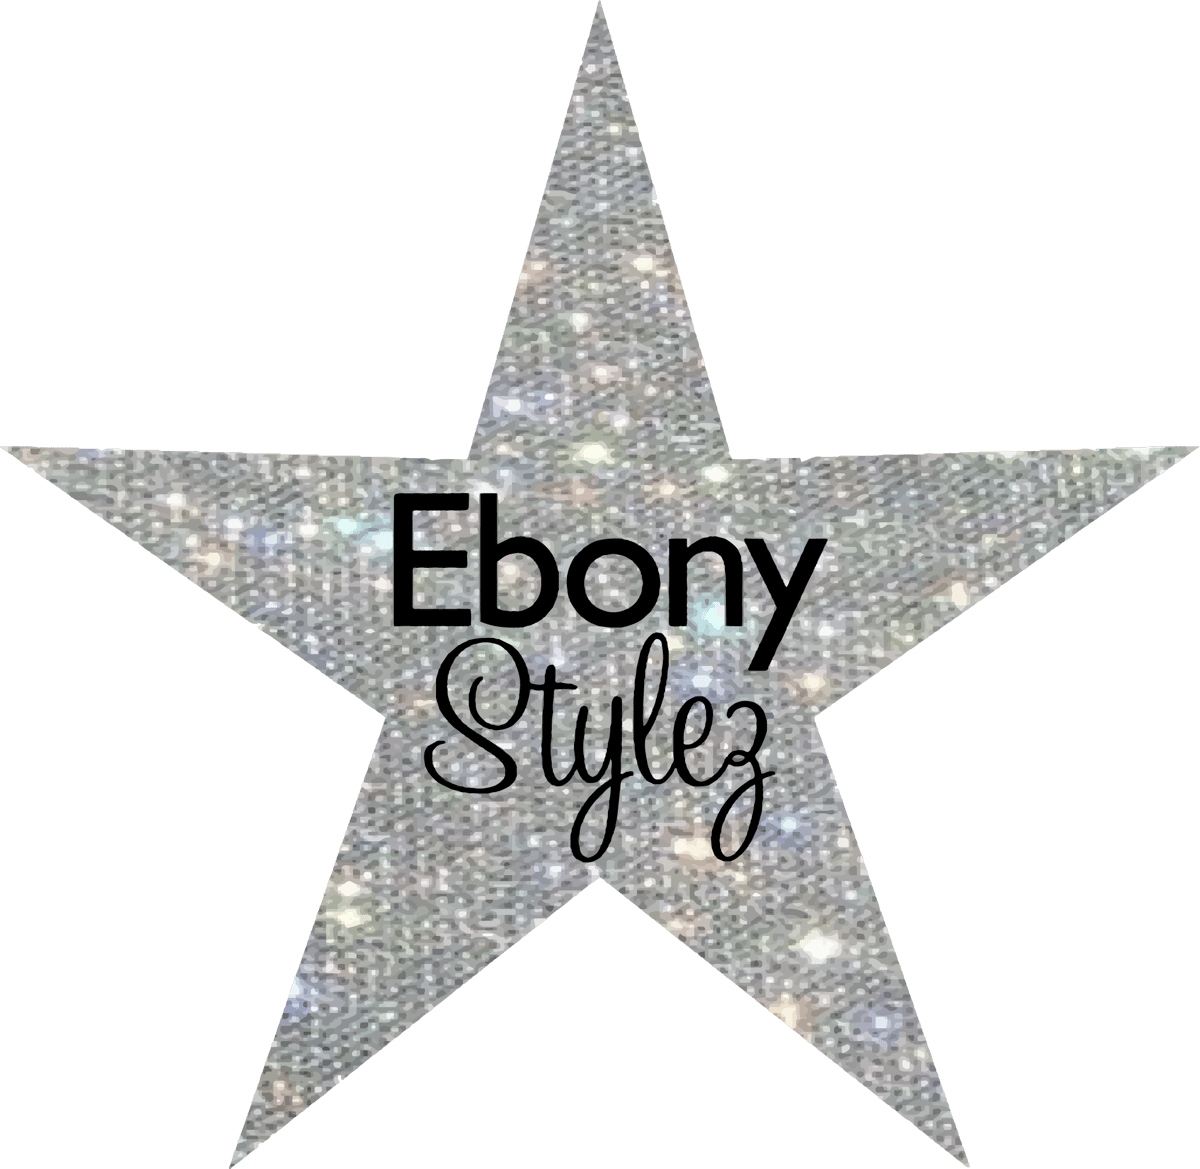 Home Ebony Star Stylez Beauty